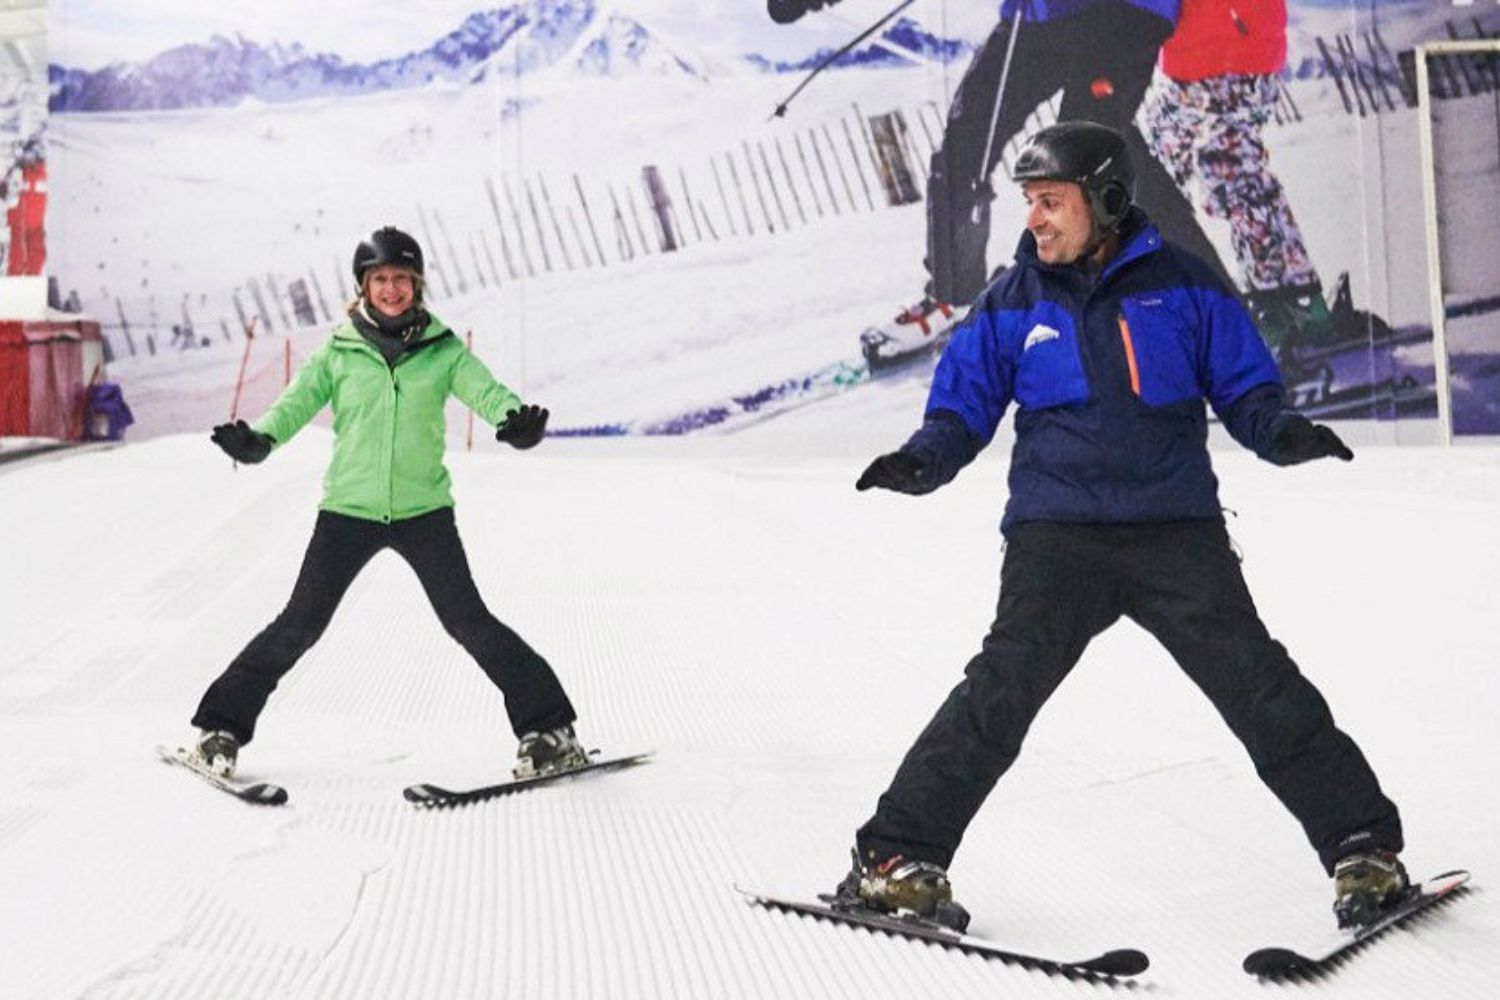 Man teaching woman ski techniques for dry slope skiing - The Snow Centre, Hemel Hempstead